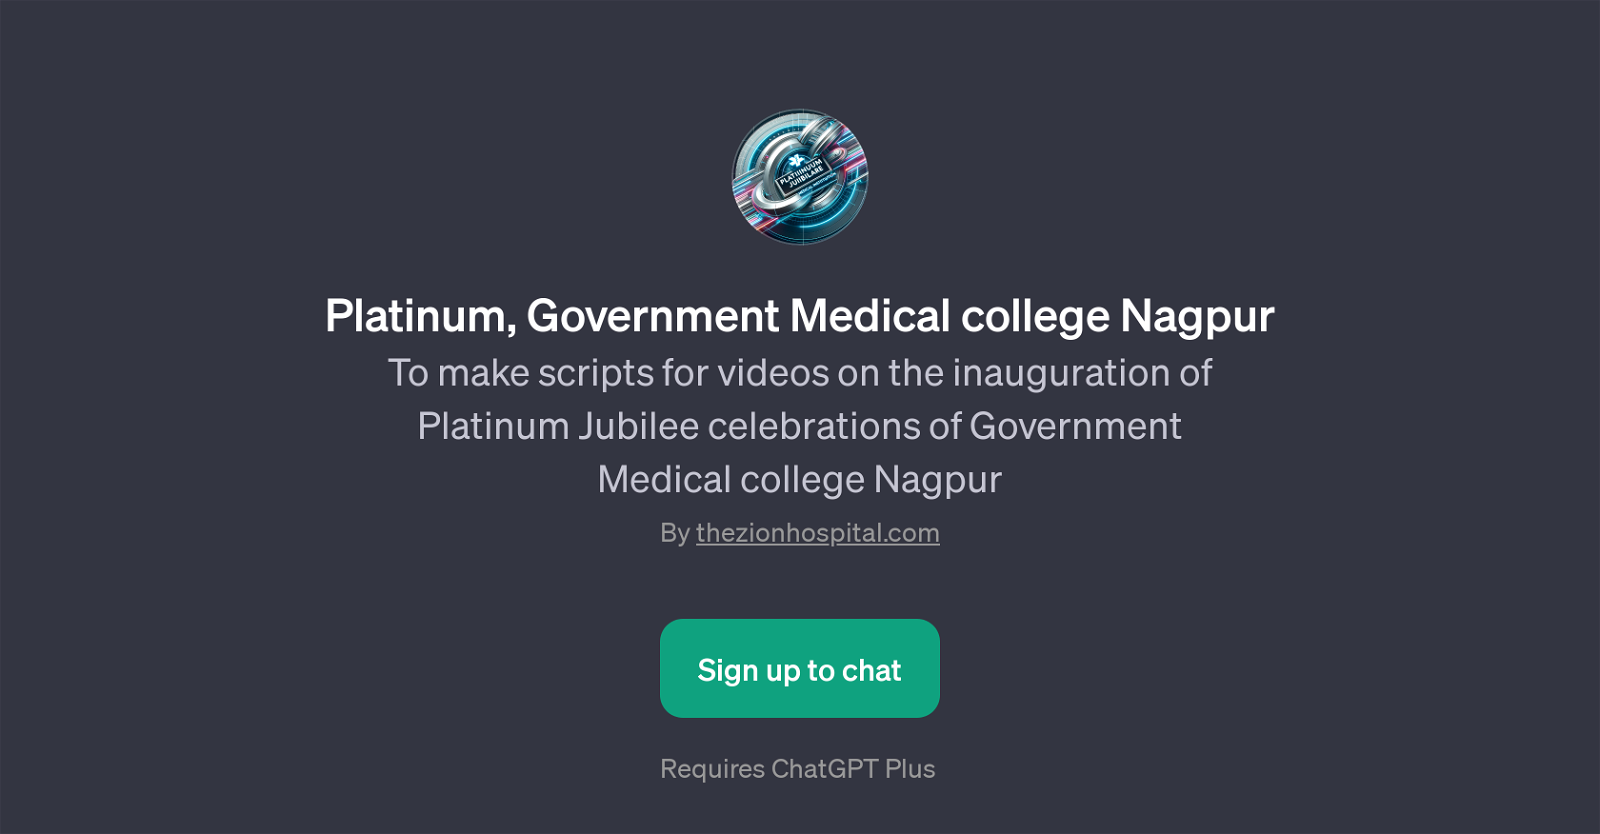 Platinum, Government Medical College Nagpur GPT website